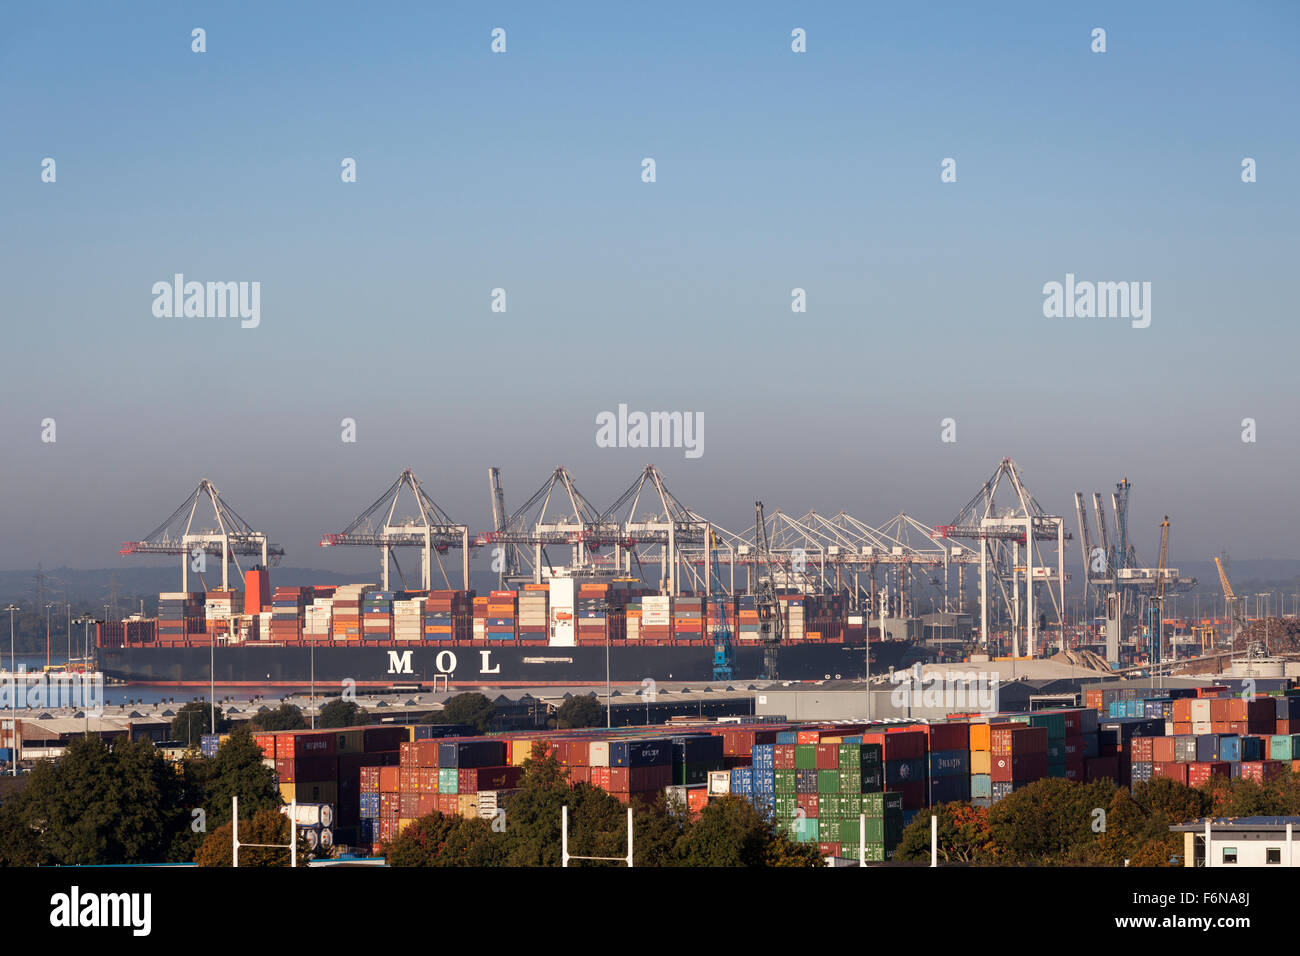 Mol-Quarz-Container-Schiff in Southampton Container-Hafen, DP World, Southampton Docks abgebildet Stockfoto